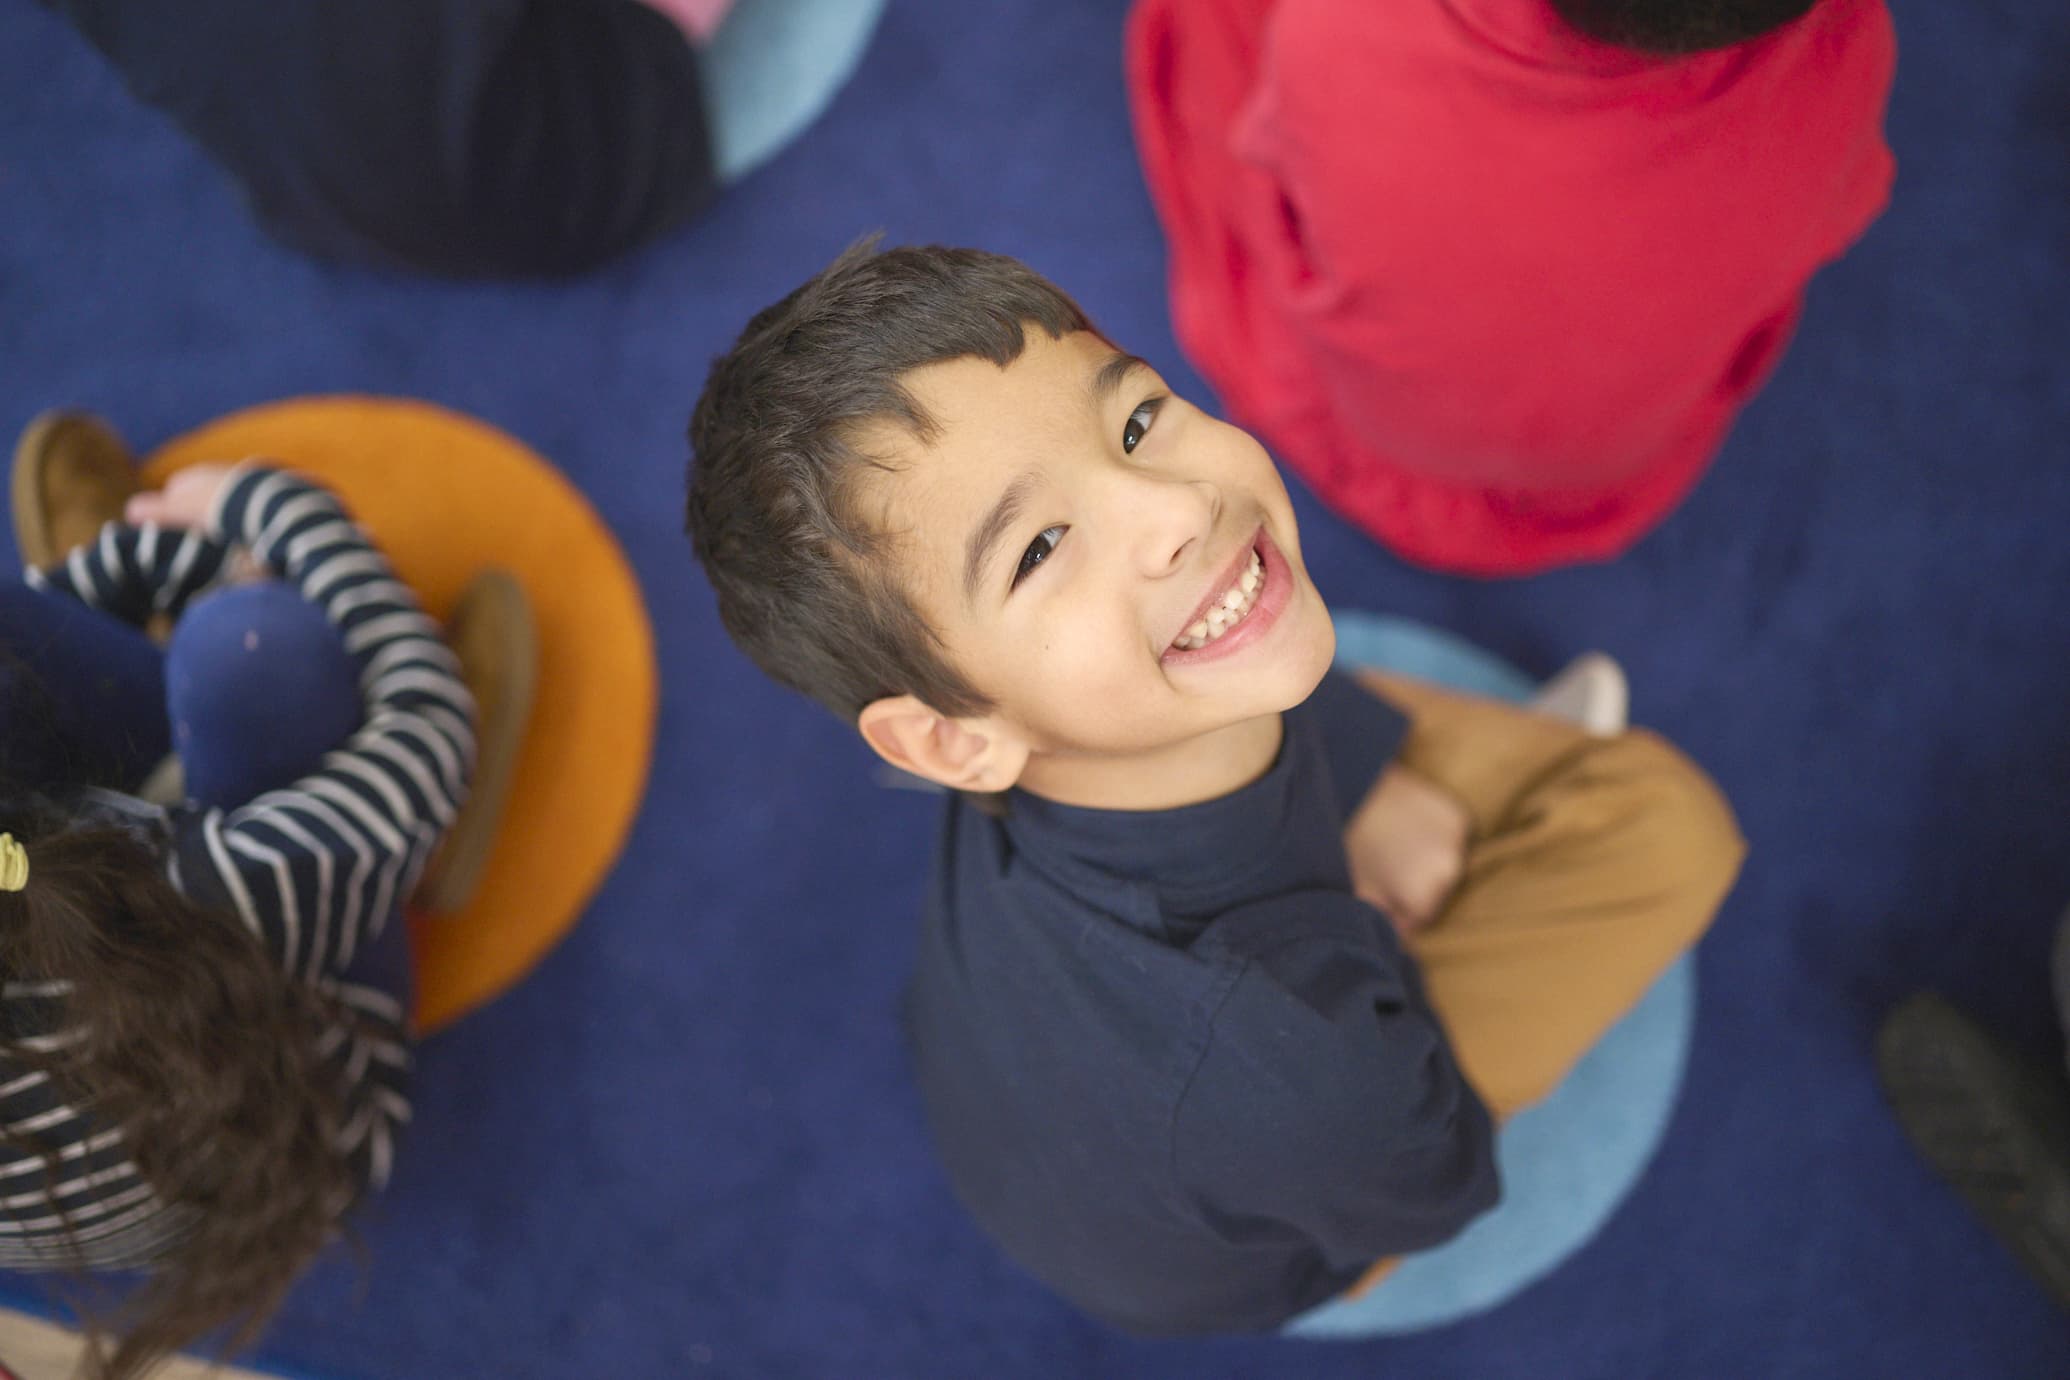 kindergarten child smiling